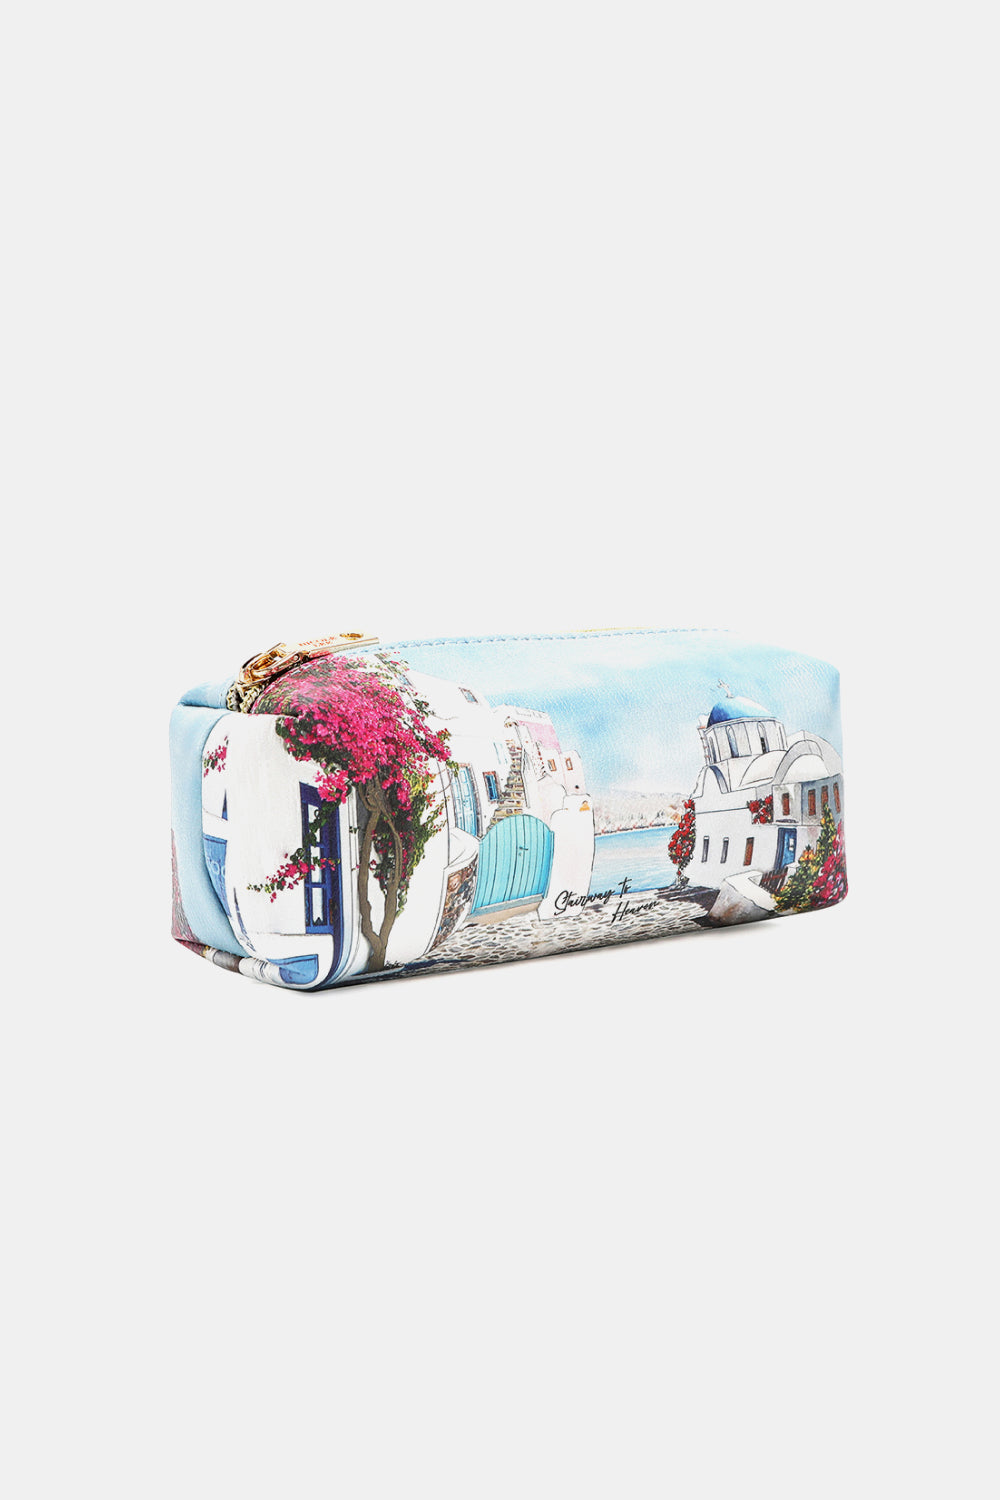 Nicole Lee USA Printed Handbag with Three Pouches  | KIKI COUTURE